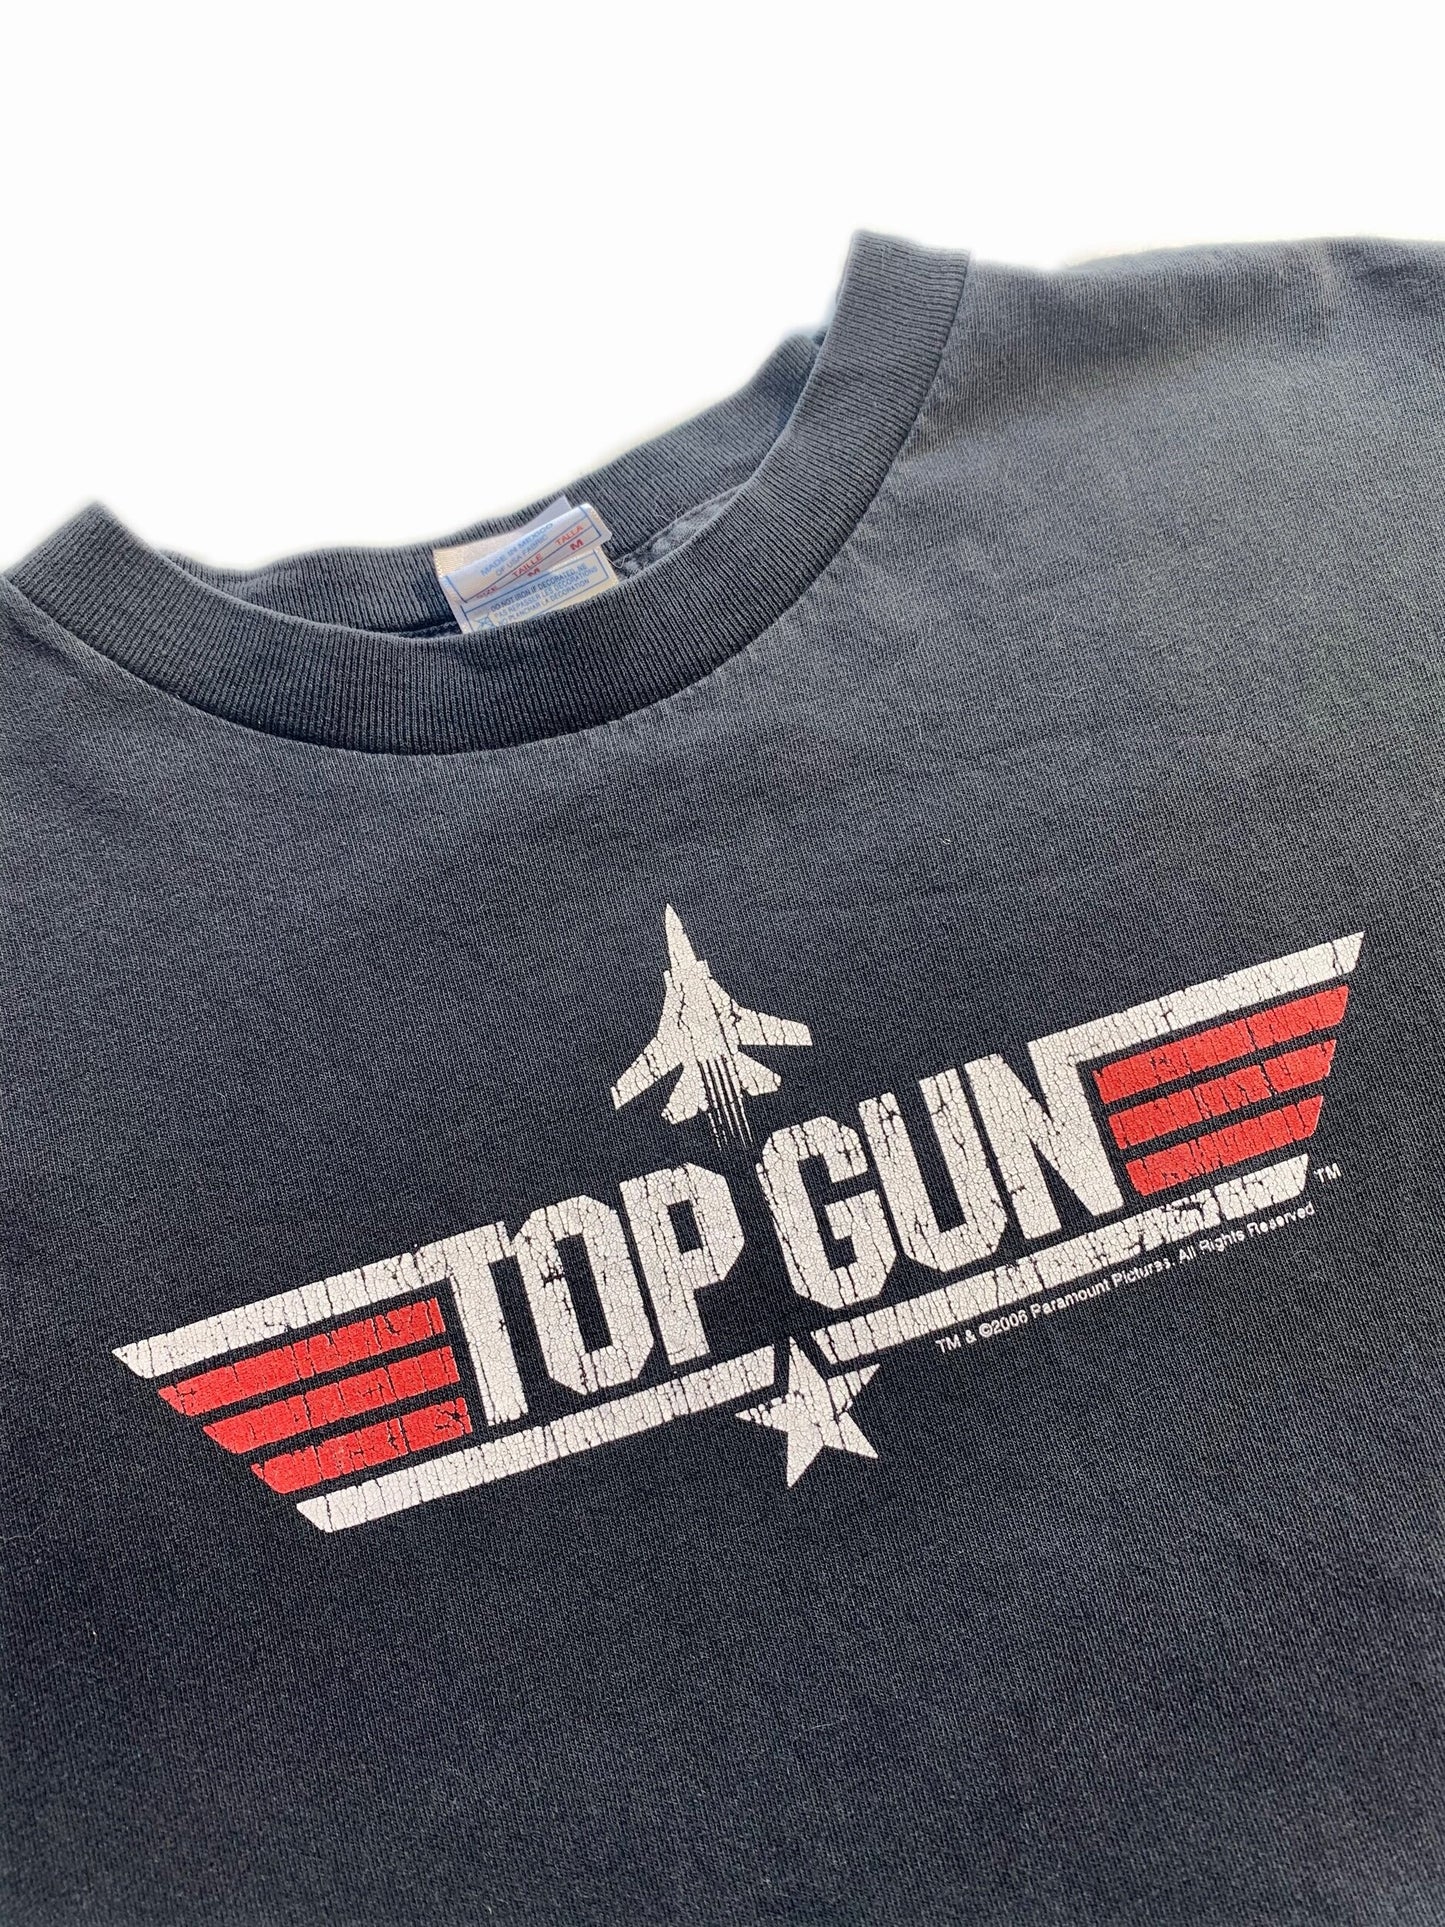 Vintage Top Gun T-Shirt